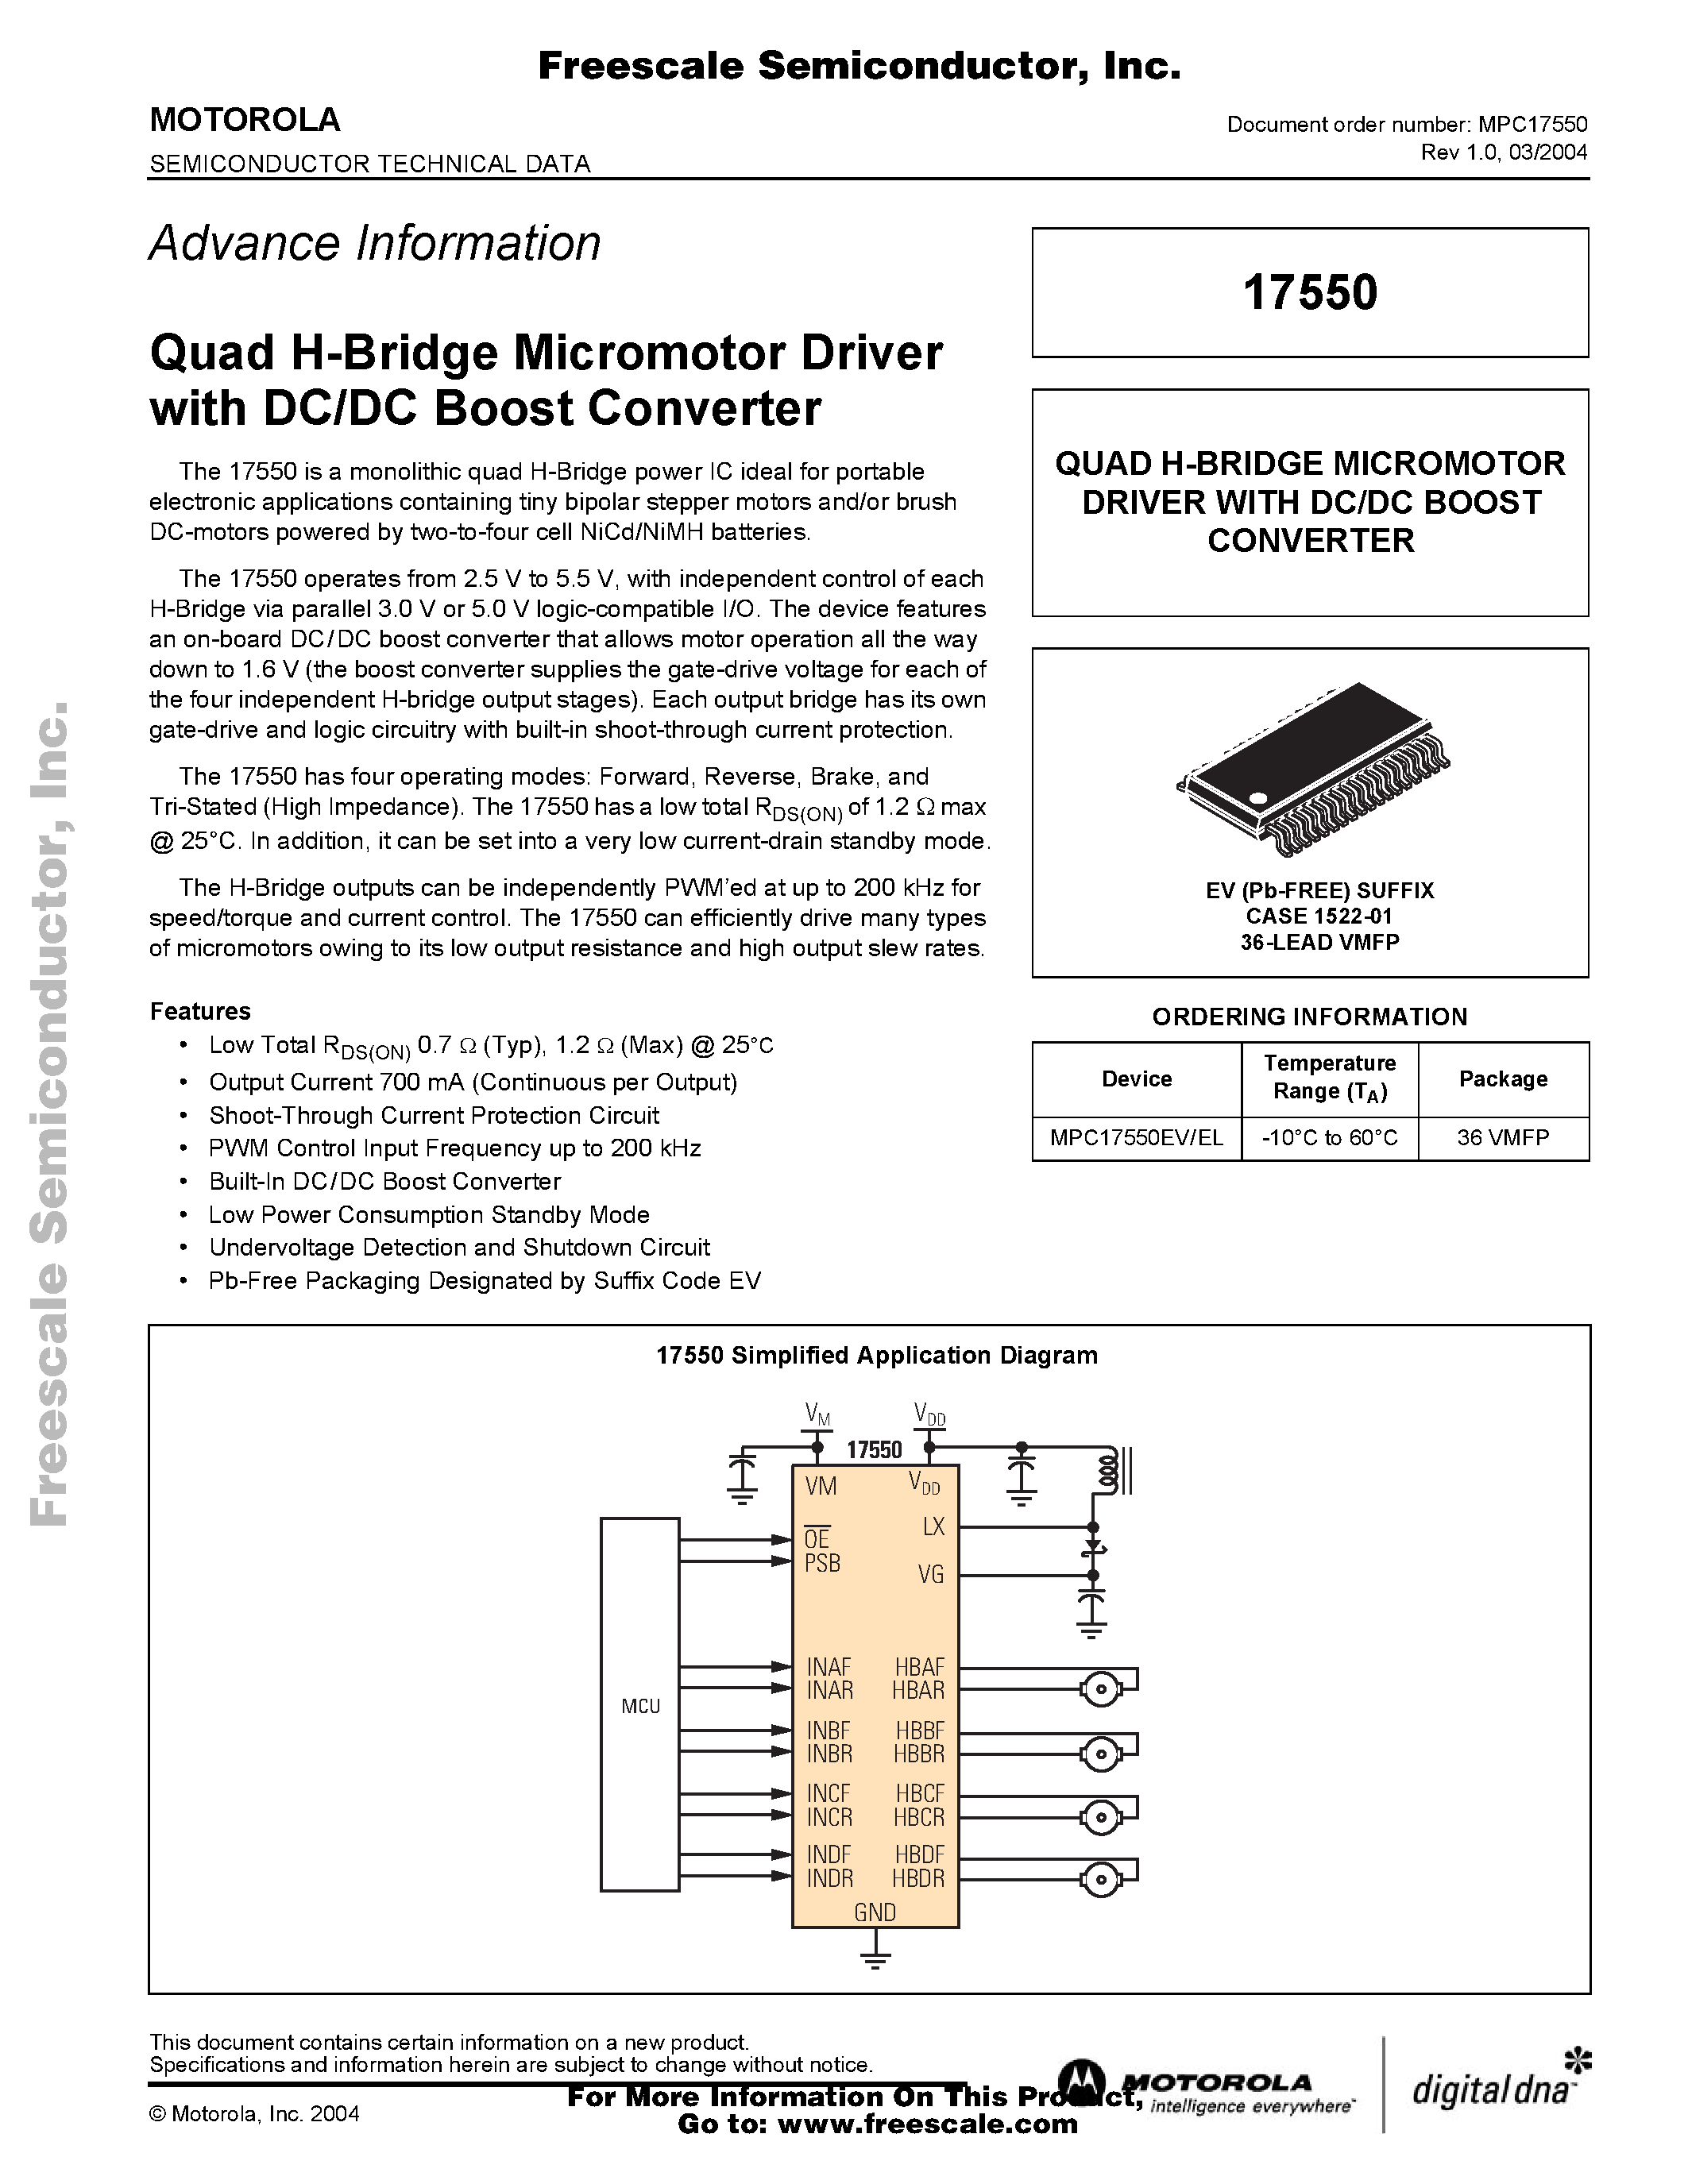 Даташит MPC17550EL - Quad H-Bridge Micromotor Driver with DC/DC Boost Converter страница 1